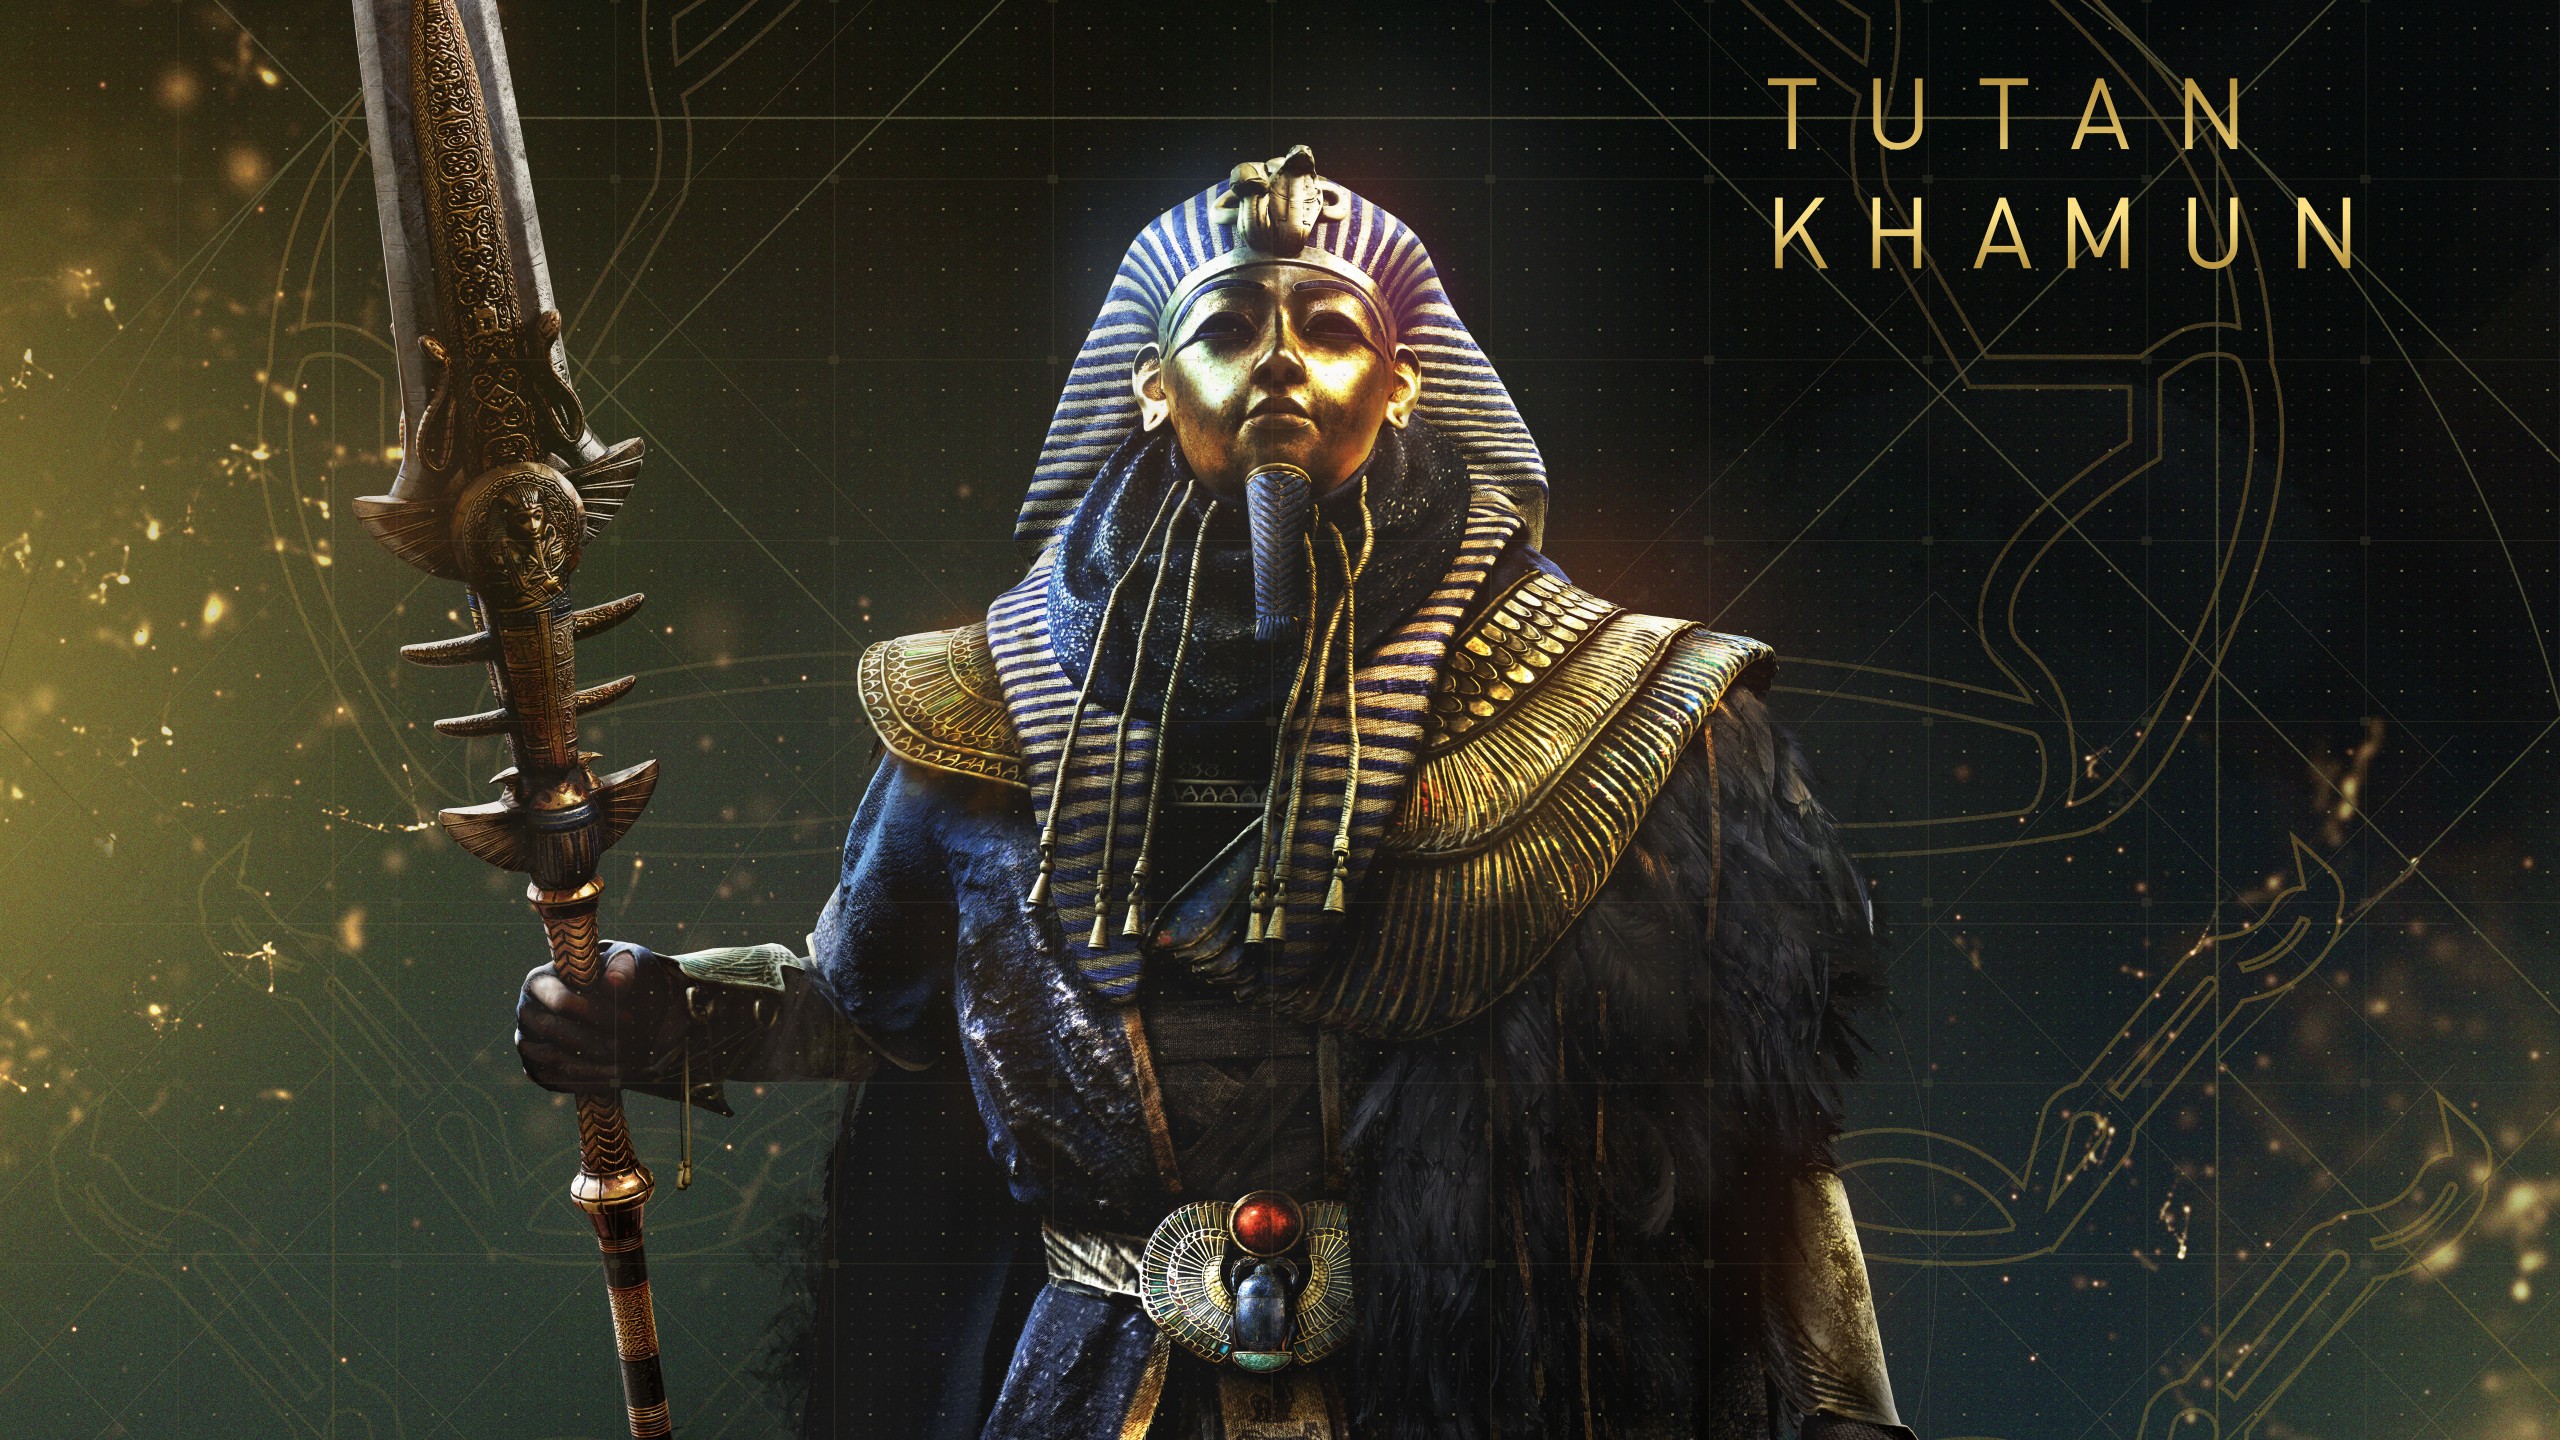 Assassins Creed Origins Tutankhamun 4K 8K Wallpapers